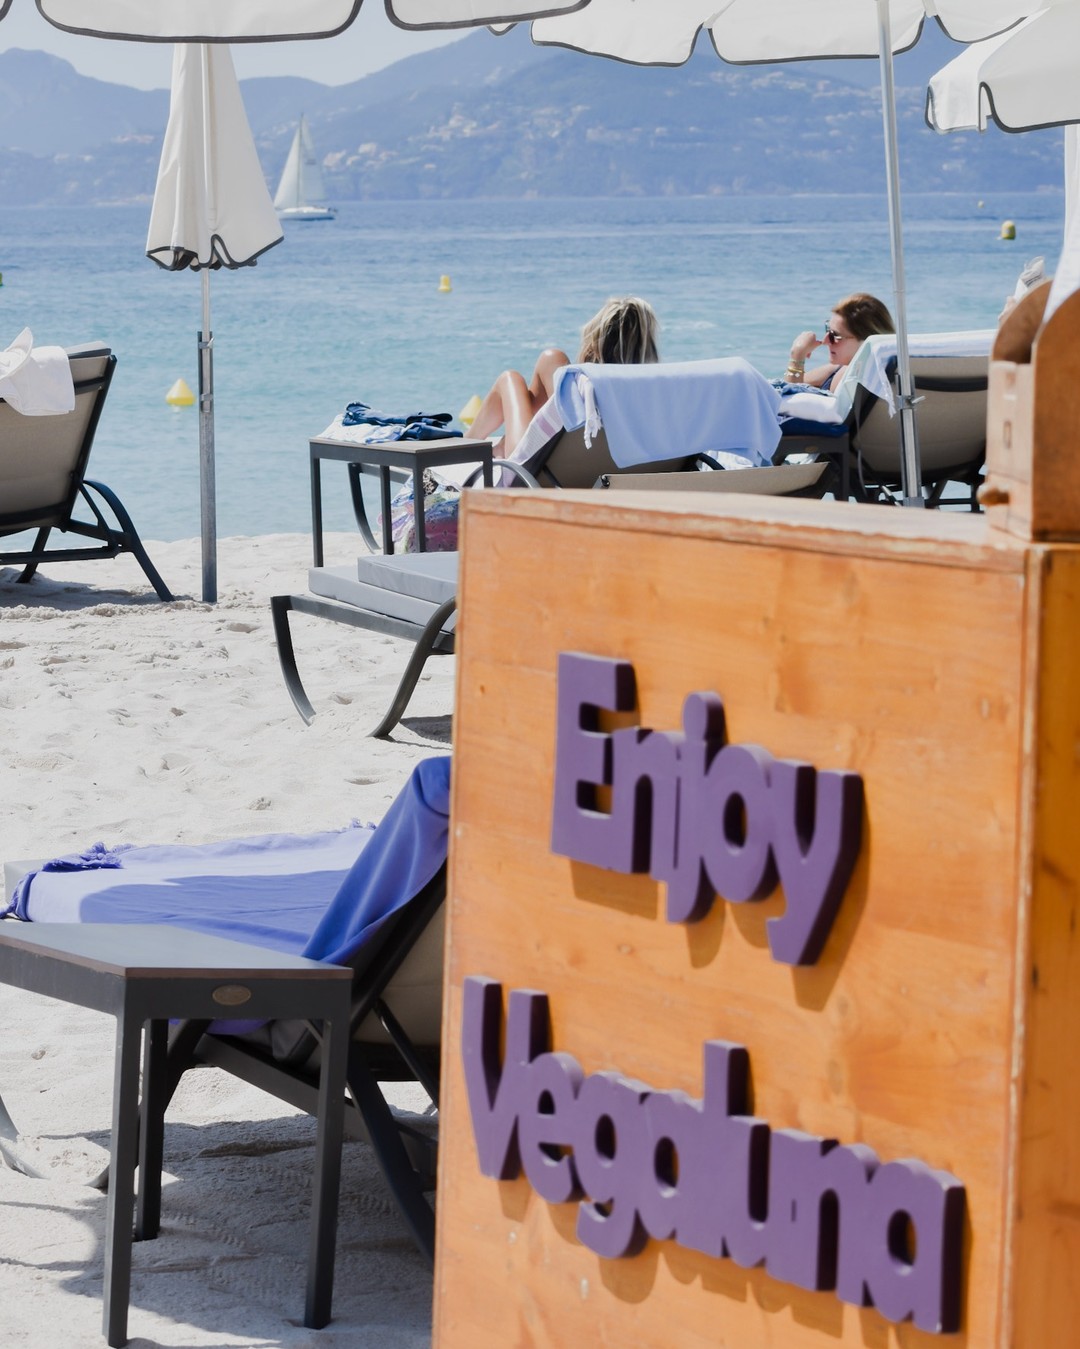 Good morning #Cannes ☀️
_
Boulevard de la Croisette, Cannes
04.93.43.67.05
www.vegaluna.fr  #food #restaurant #beach #cotedazur #plage #summer #frenchriviera